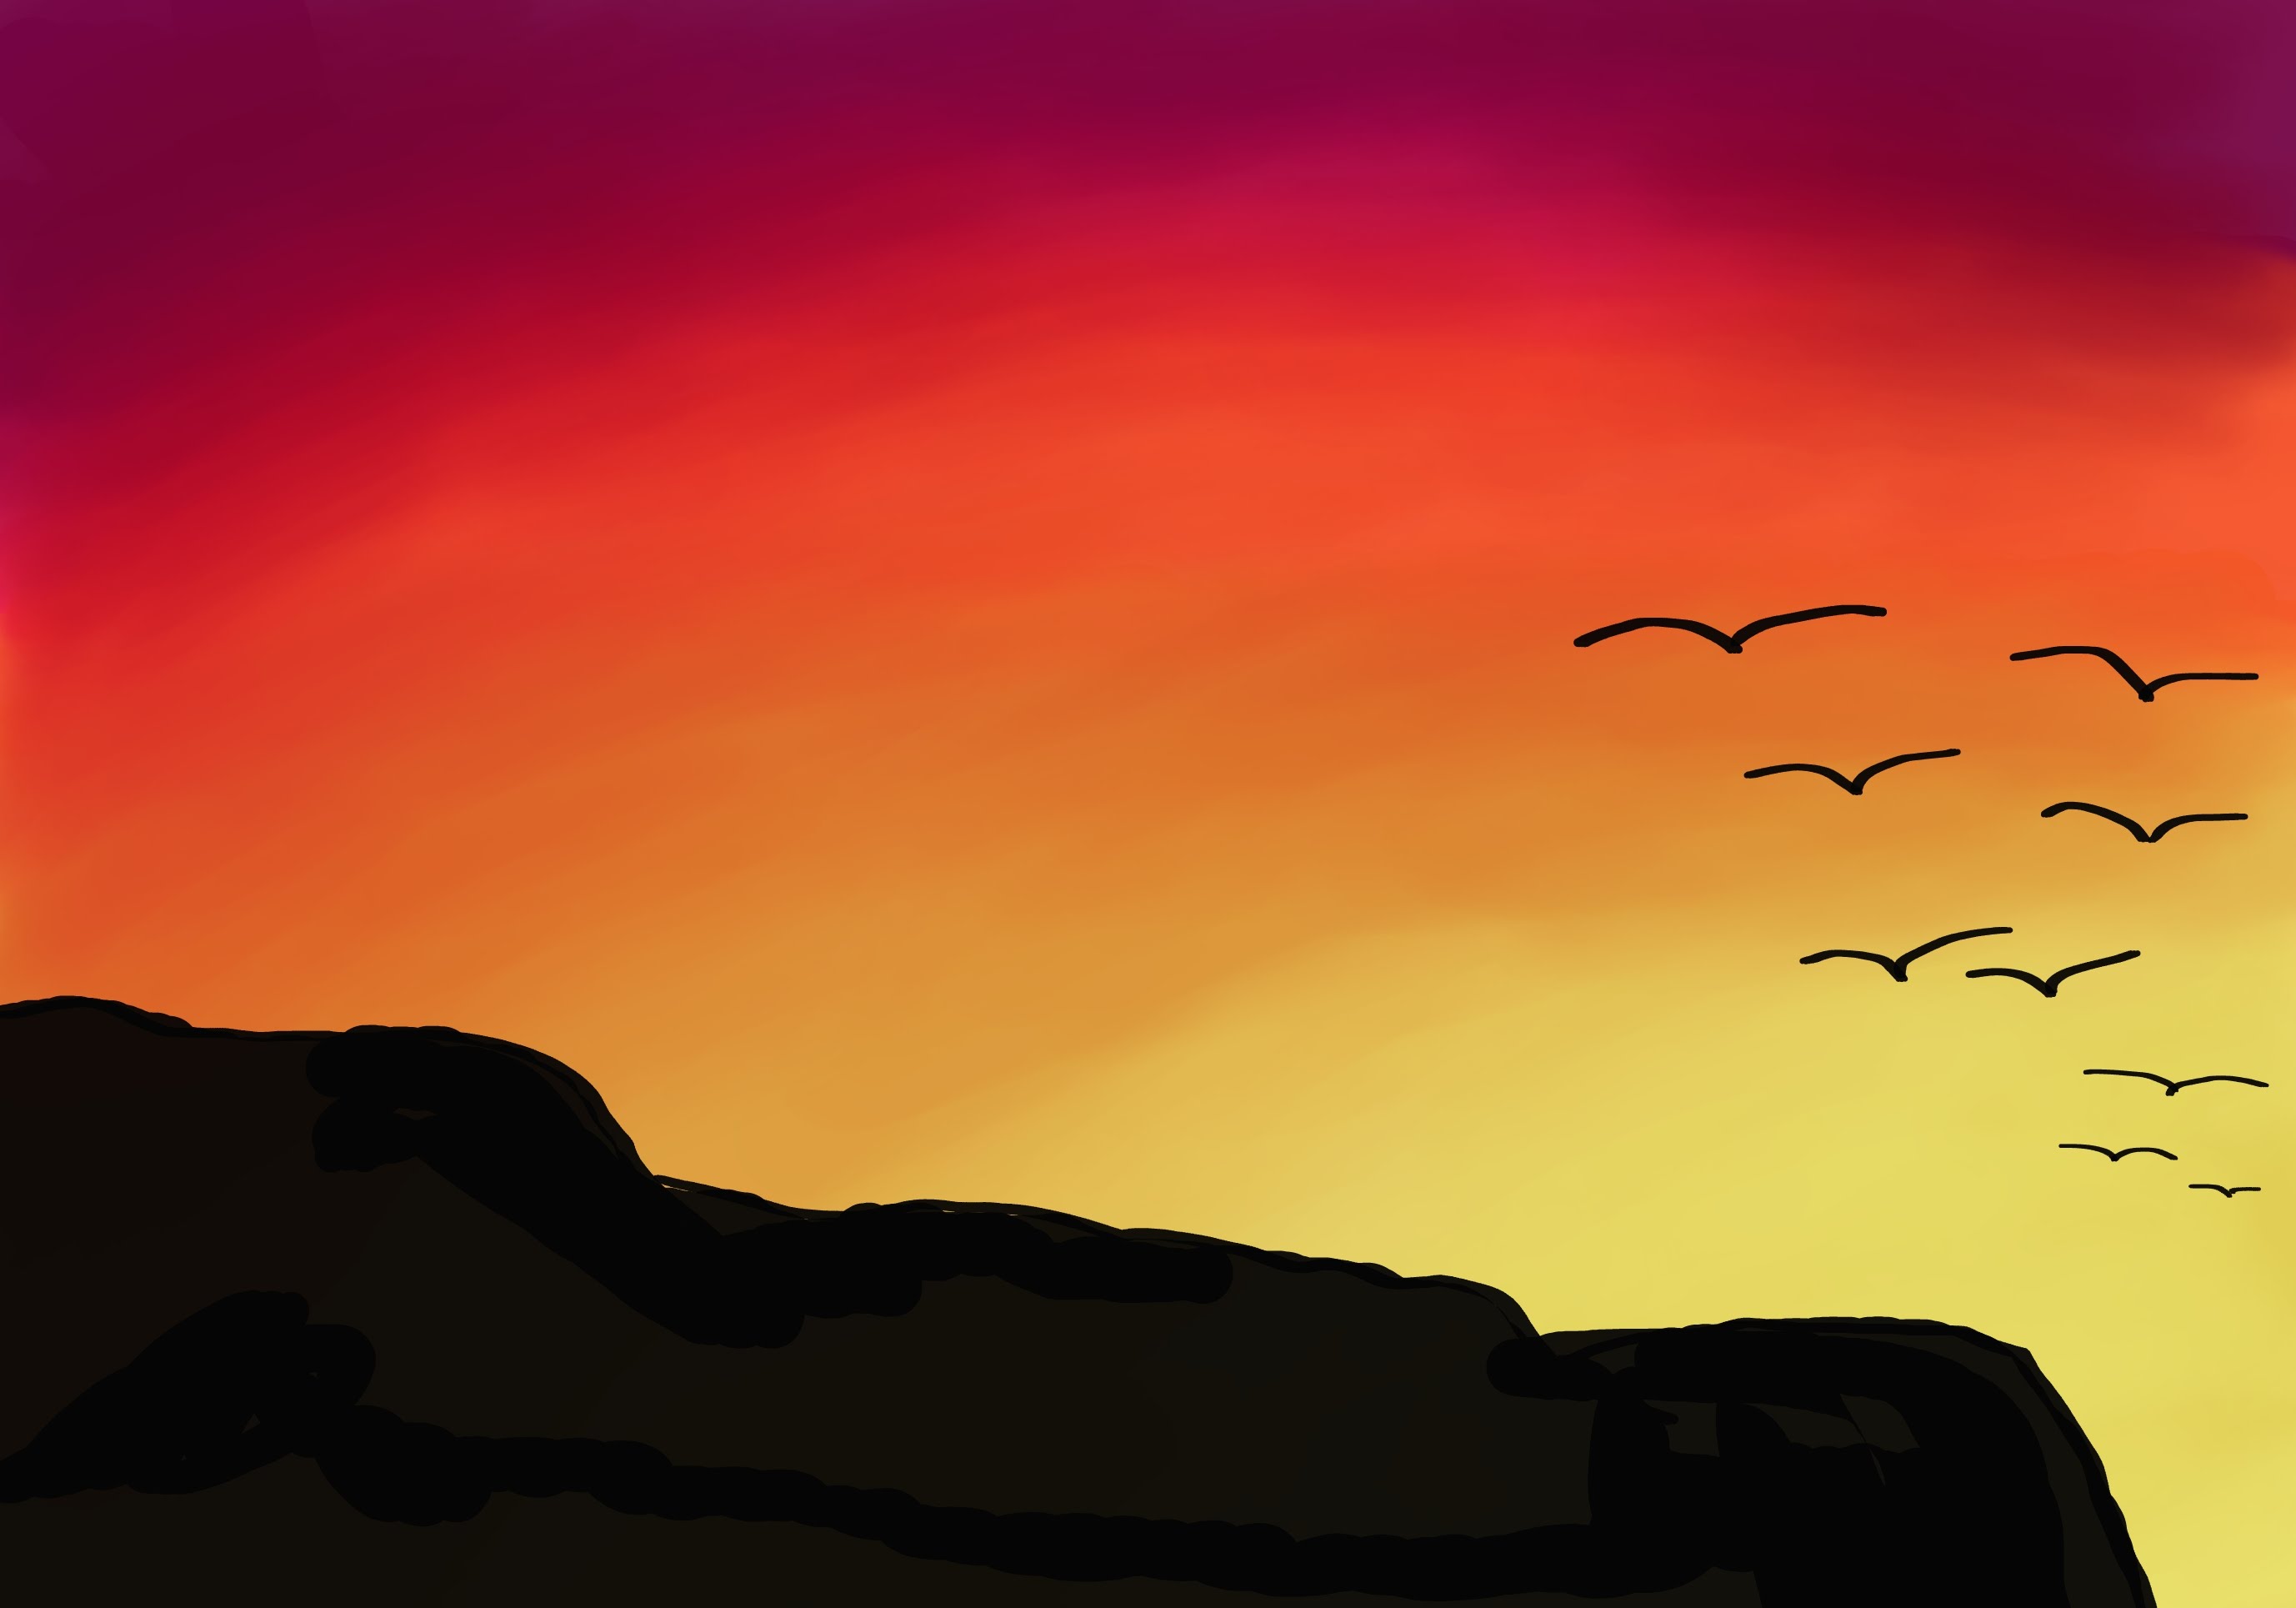 Sunset Birds - Digital Speed Painting Using FireAlpaca - YouTube